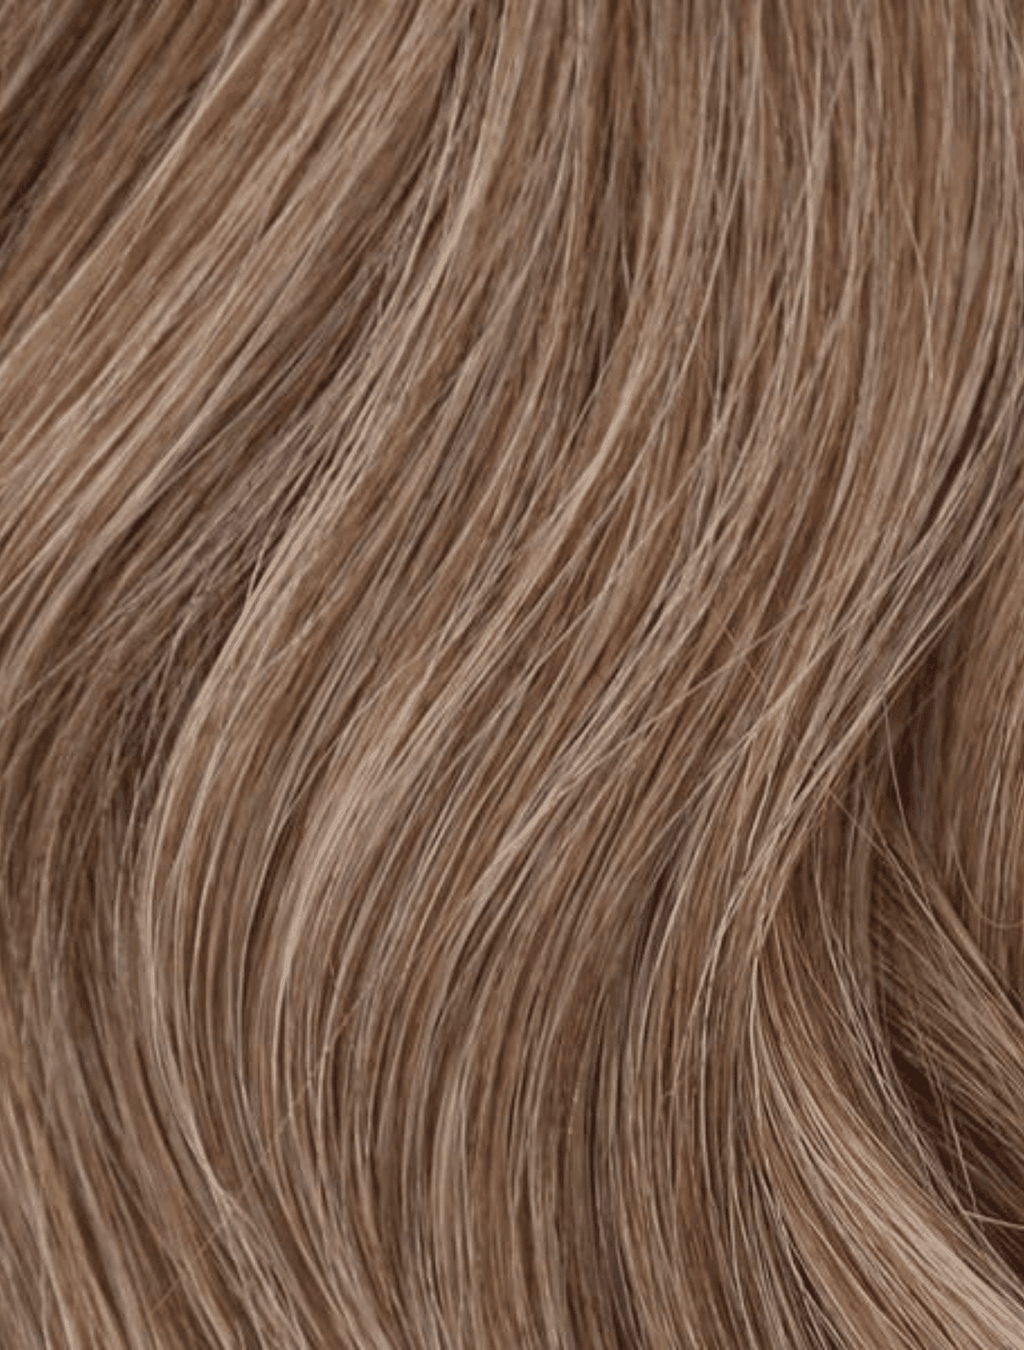 Caramel Ash Blend (4/9) 18" 125g - BOMBAY HAIR 